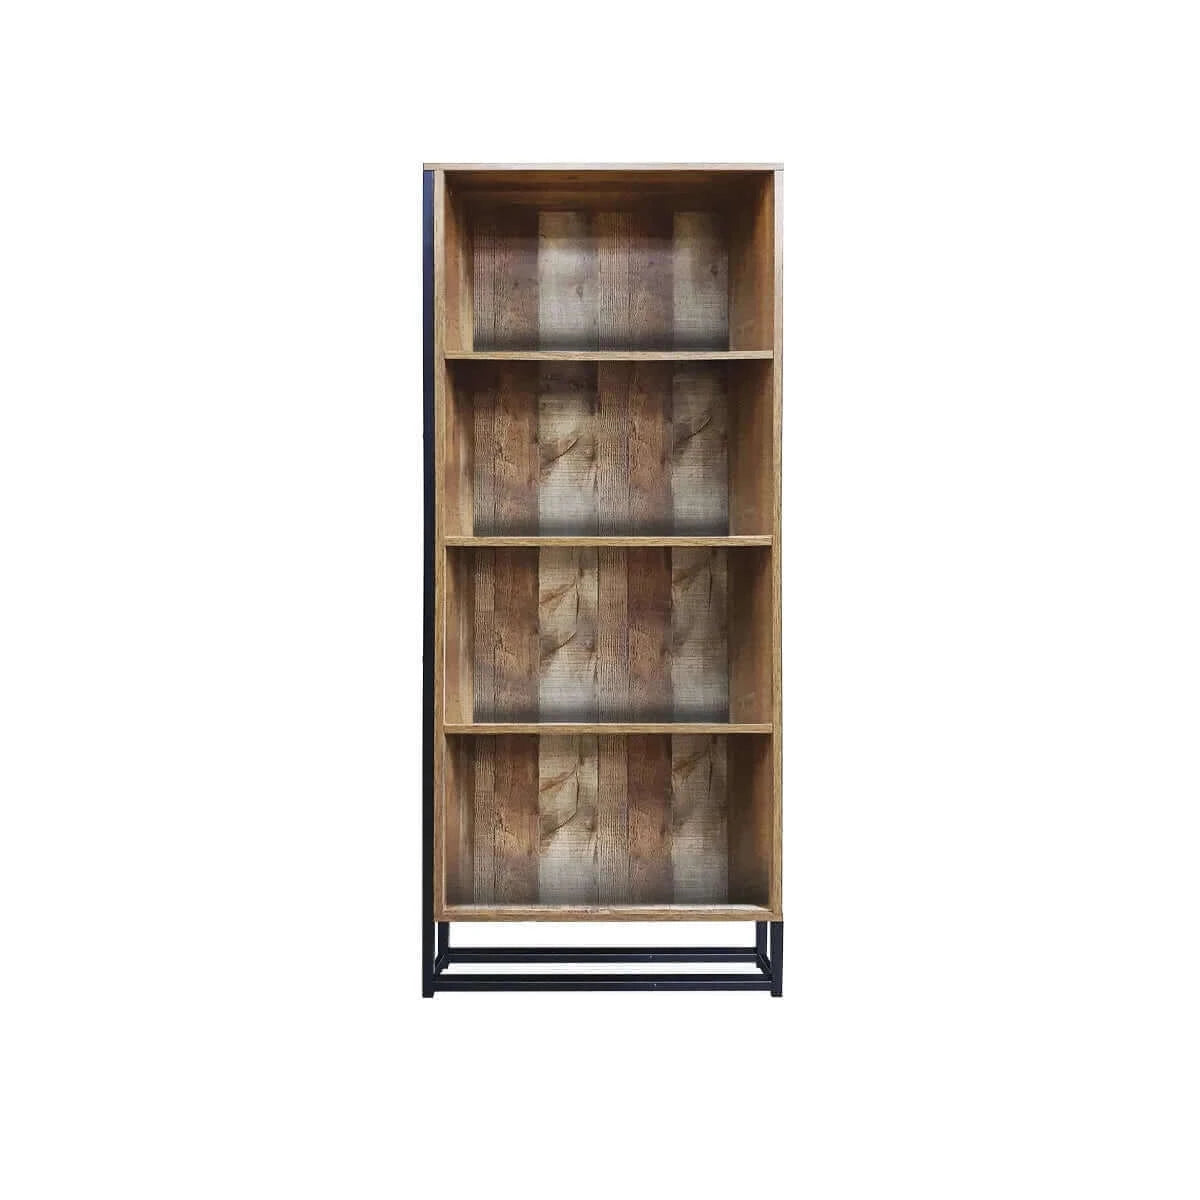 Buy home master vogue wood tone bookcase stylish rustic flawless design 166cm - upinteriors-Upinteriors